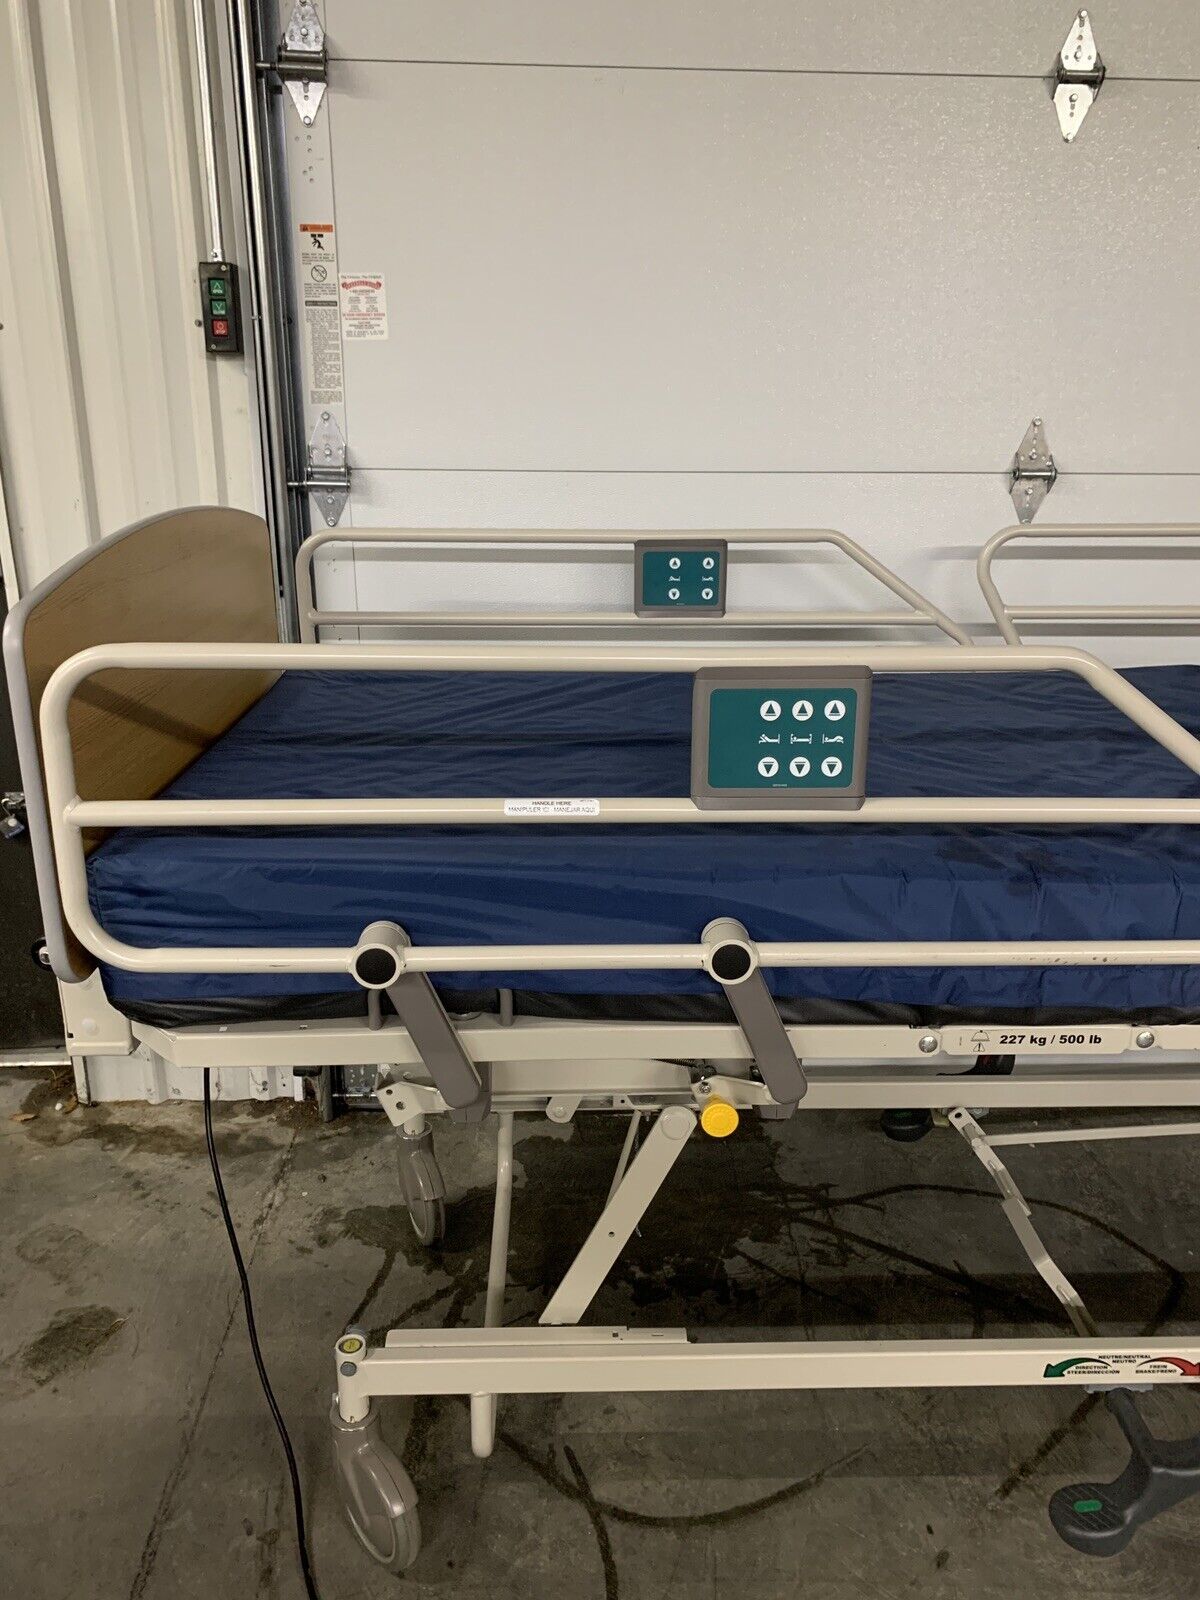 Stryker FL23SE Critical Care Hospital Bed w/ Rem Series Stryker Mattress